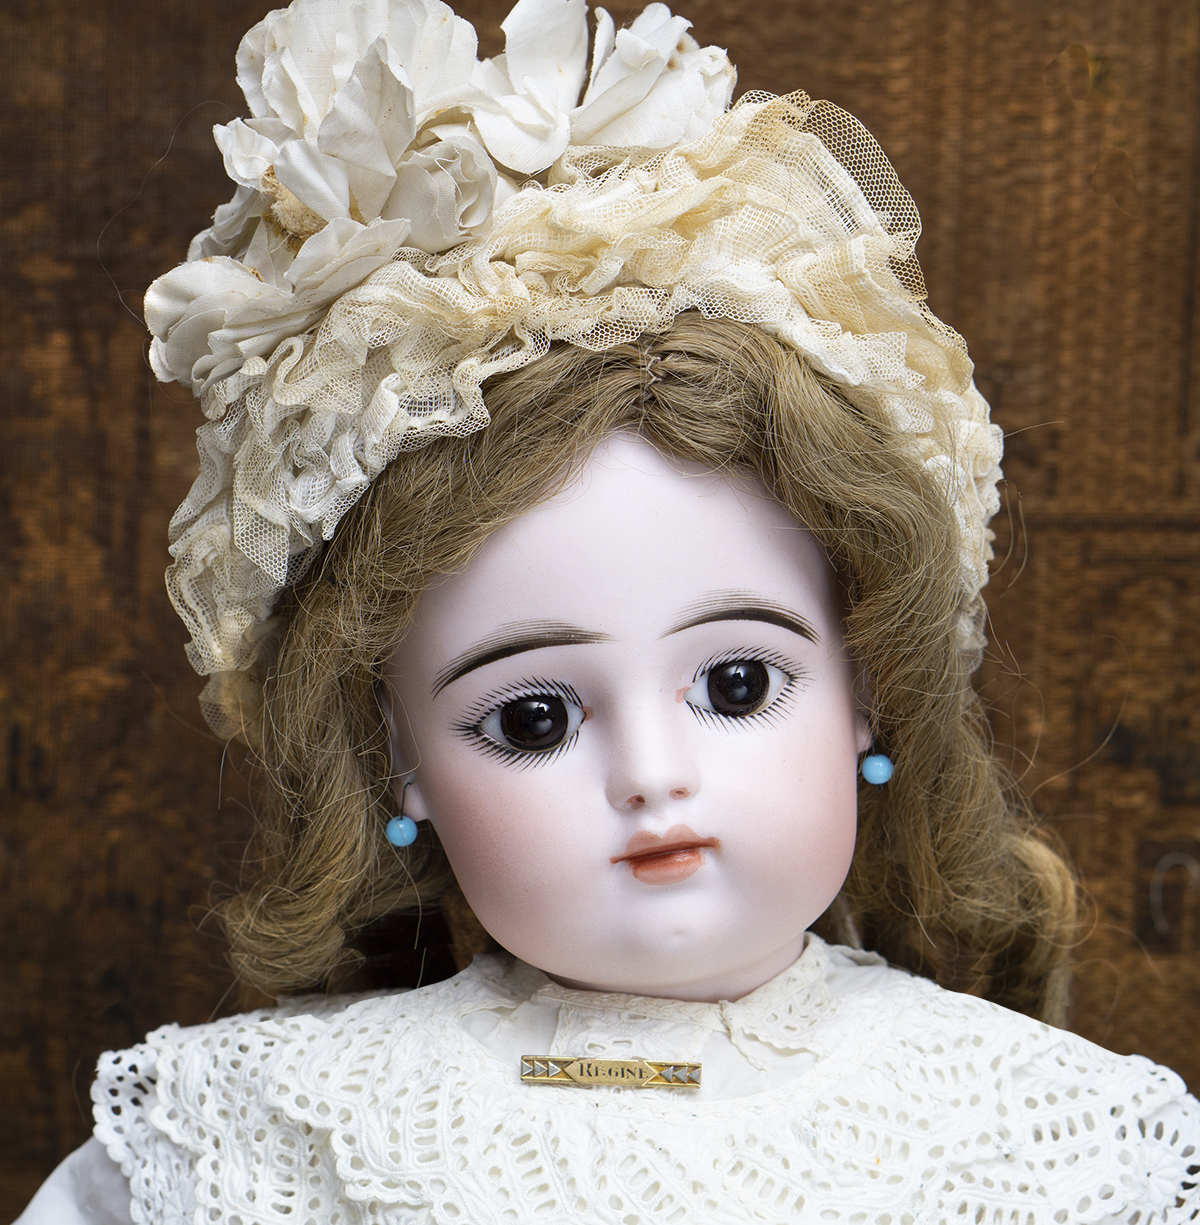 Antique bebe doll